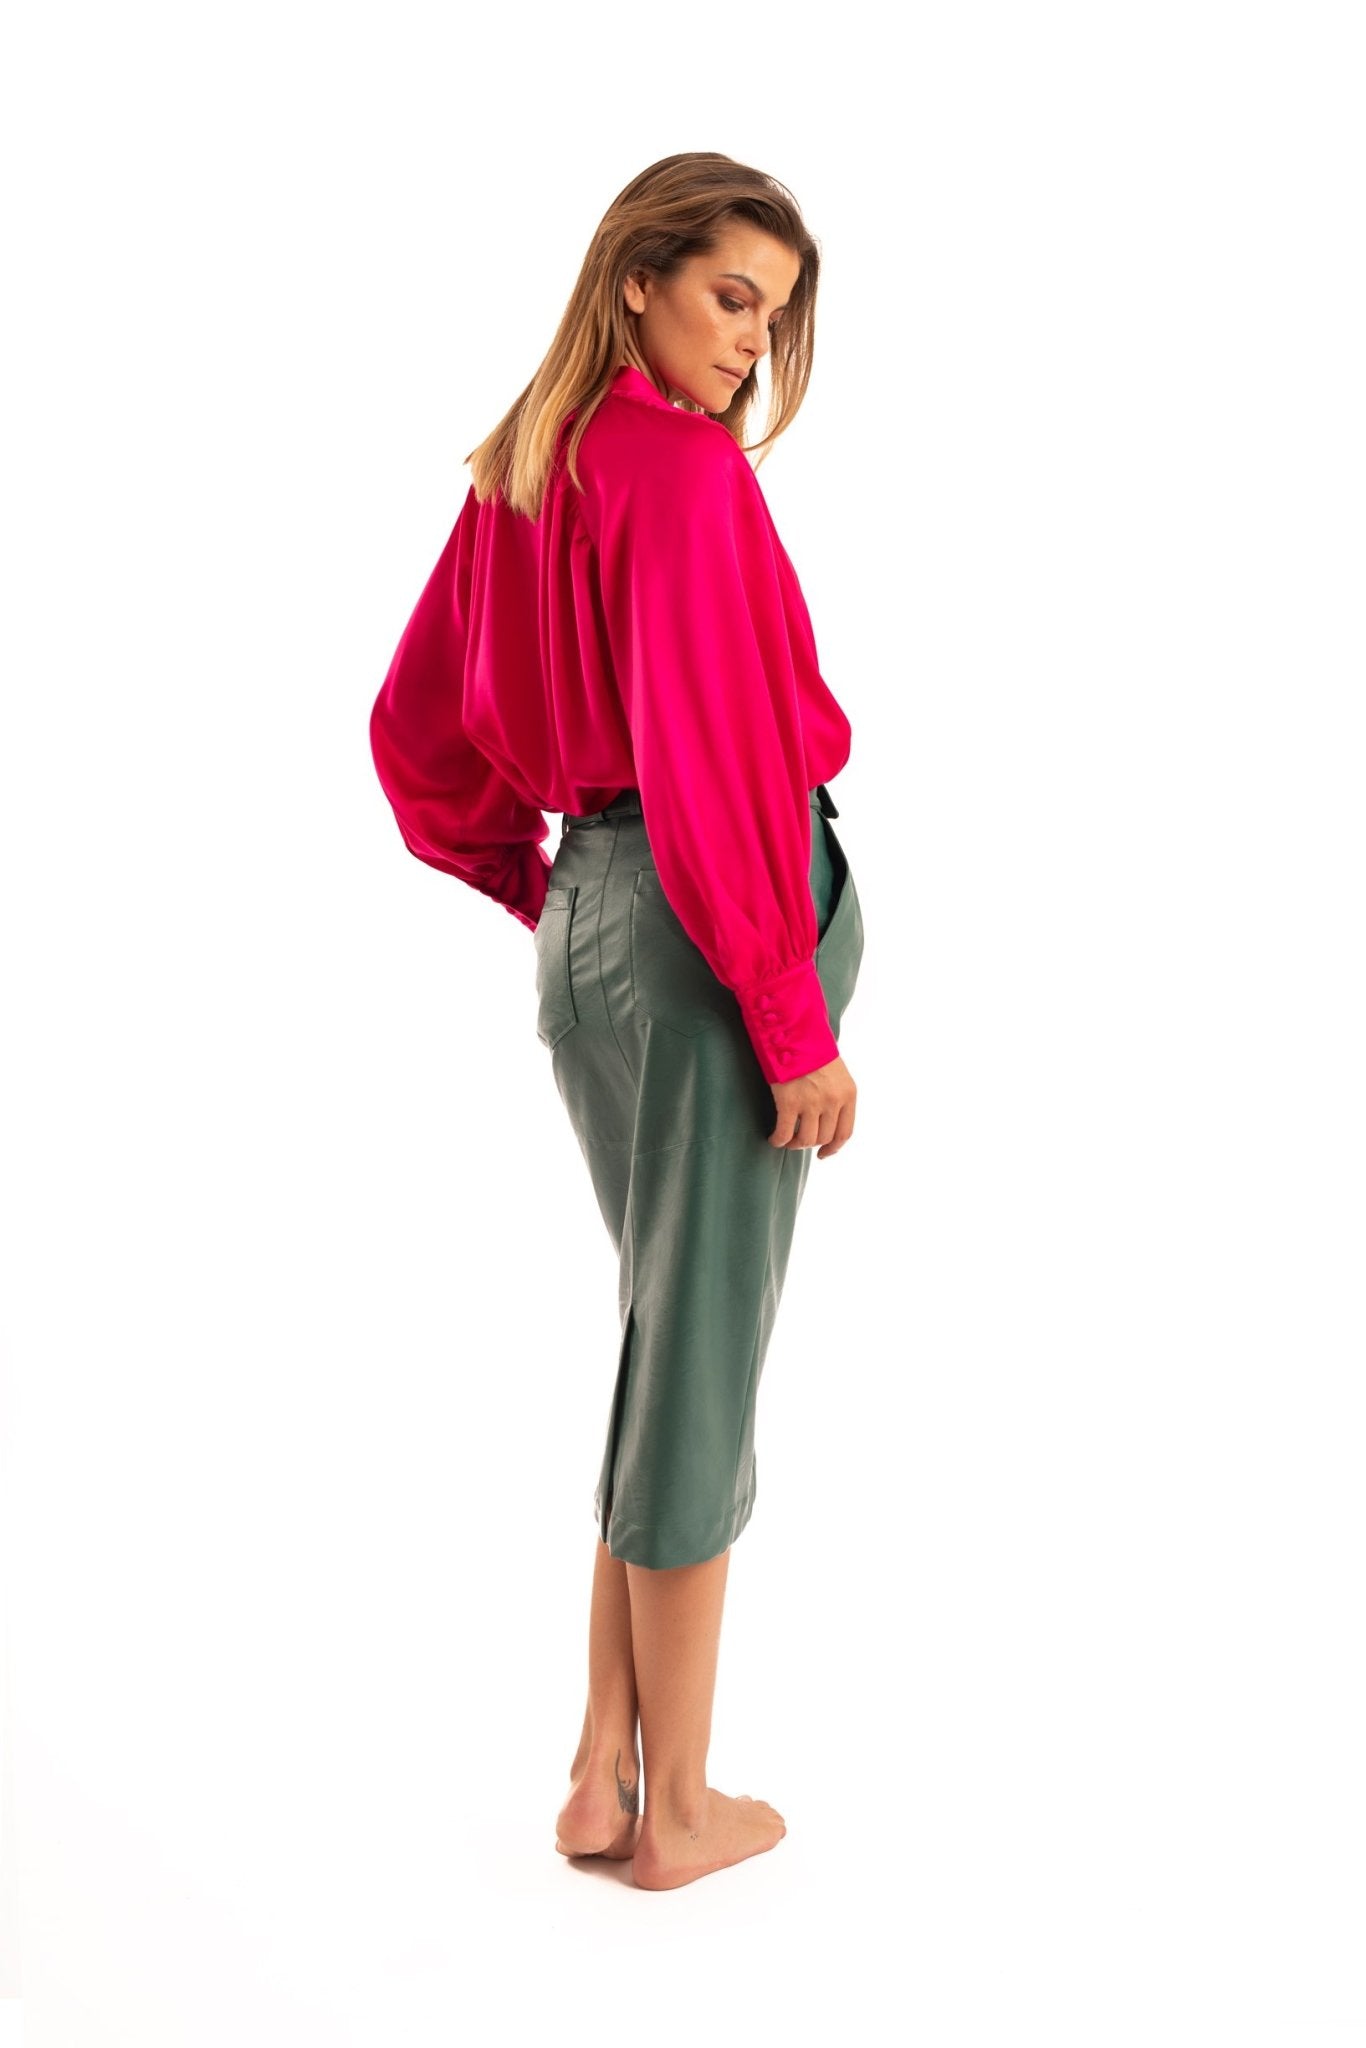 Green Midi Skirt - NOPIN - The Clothing LoungeNOPIN